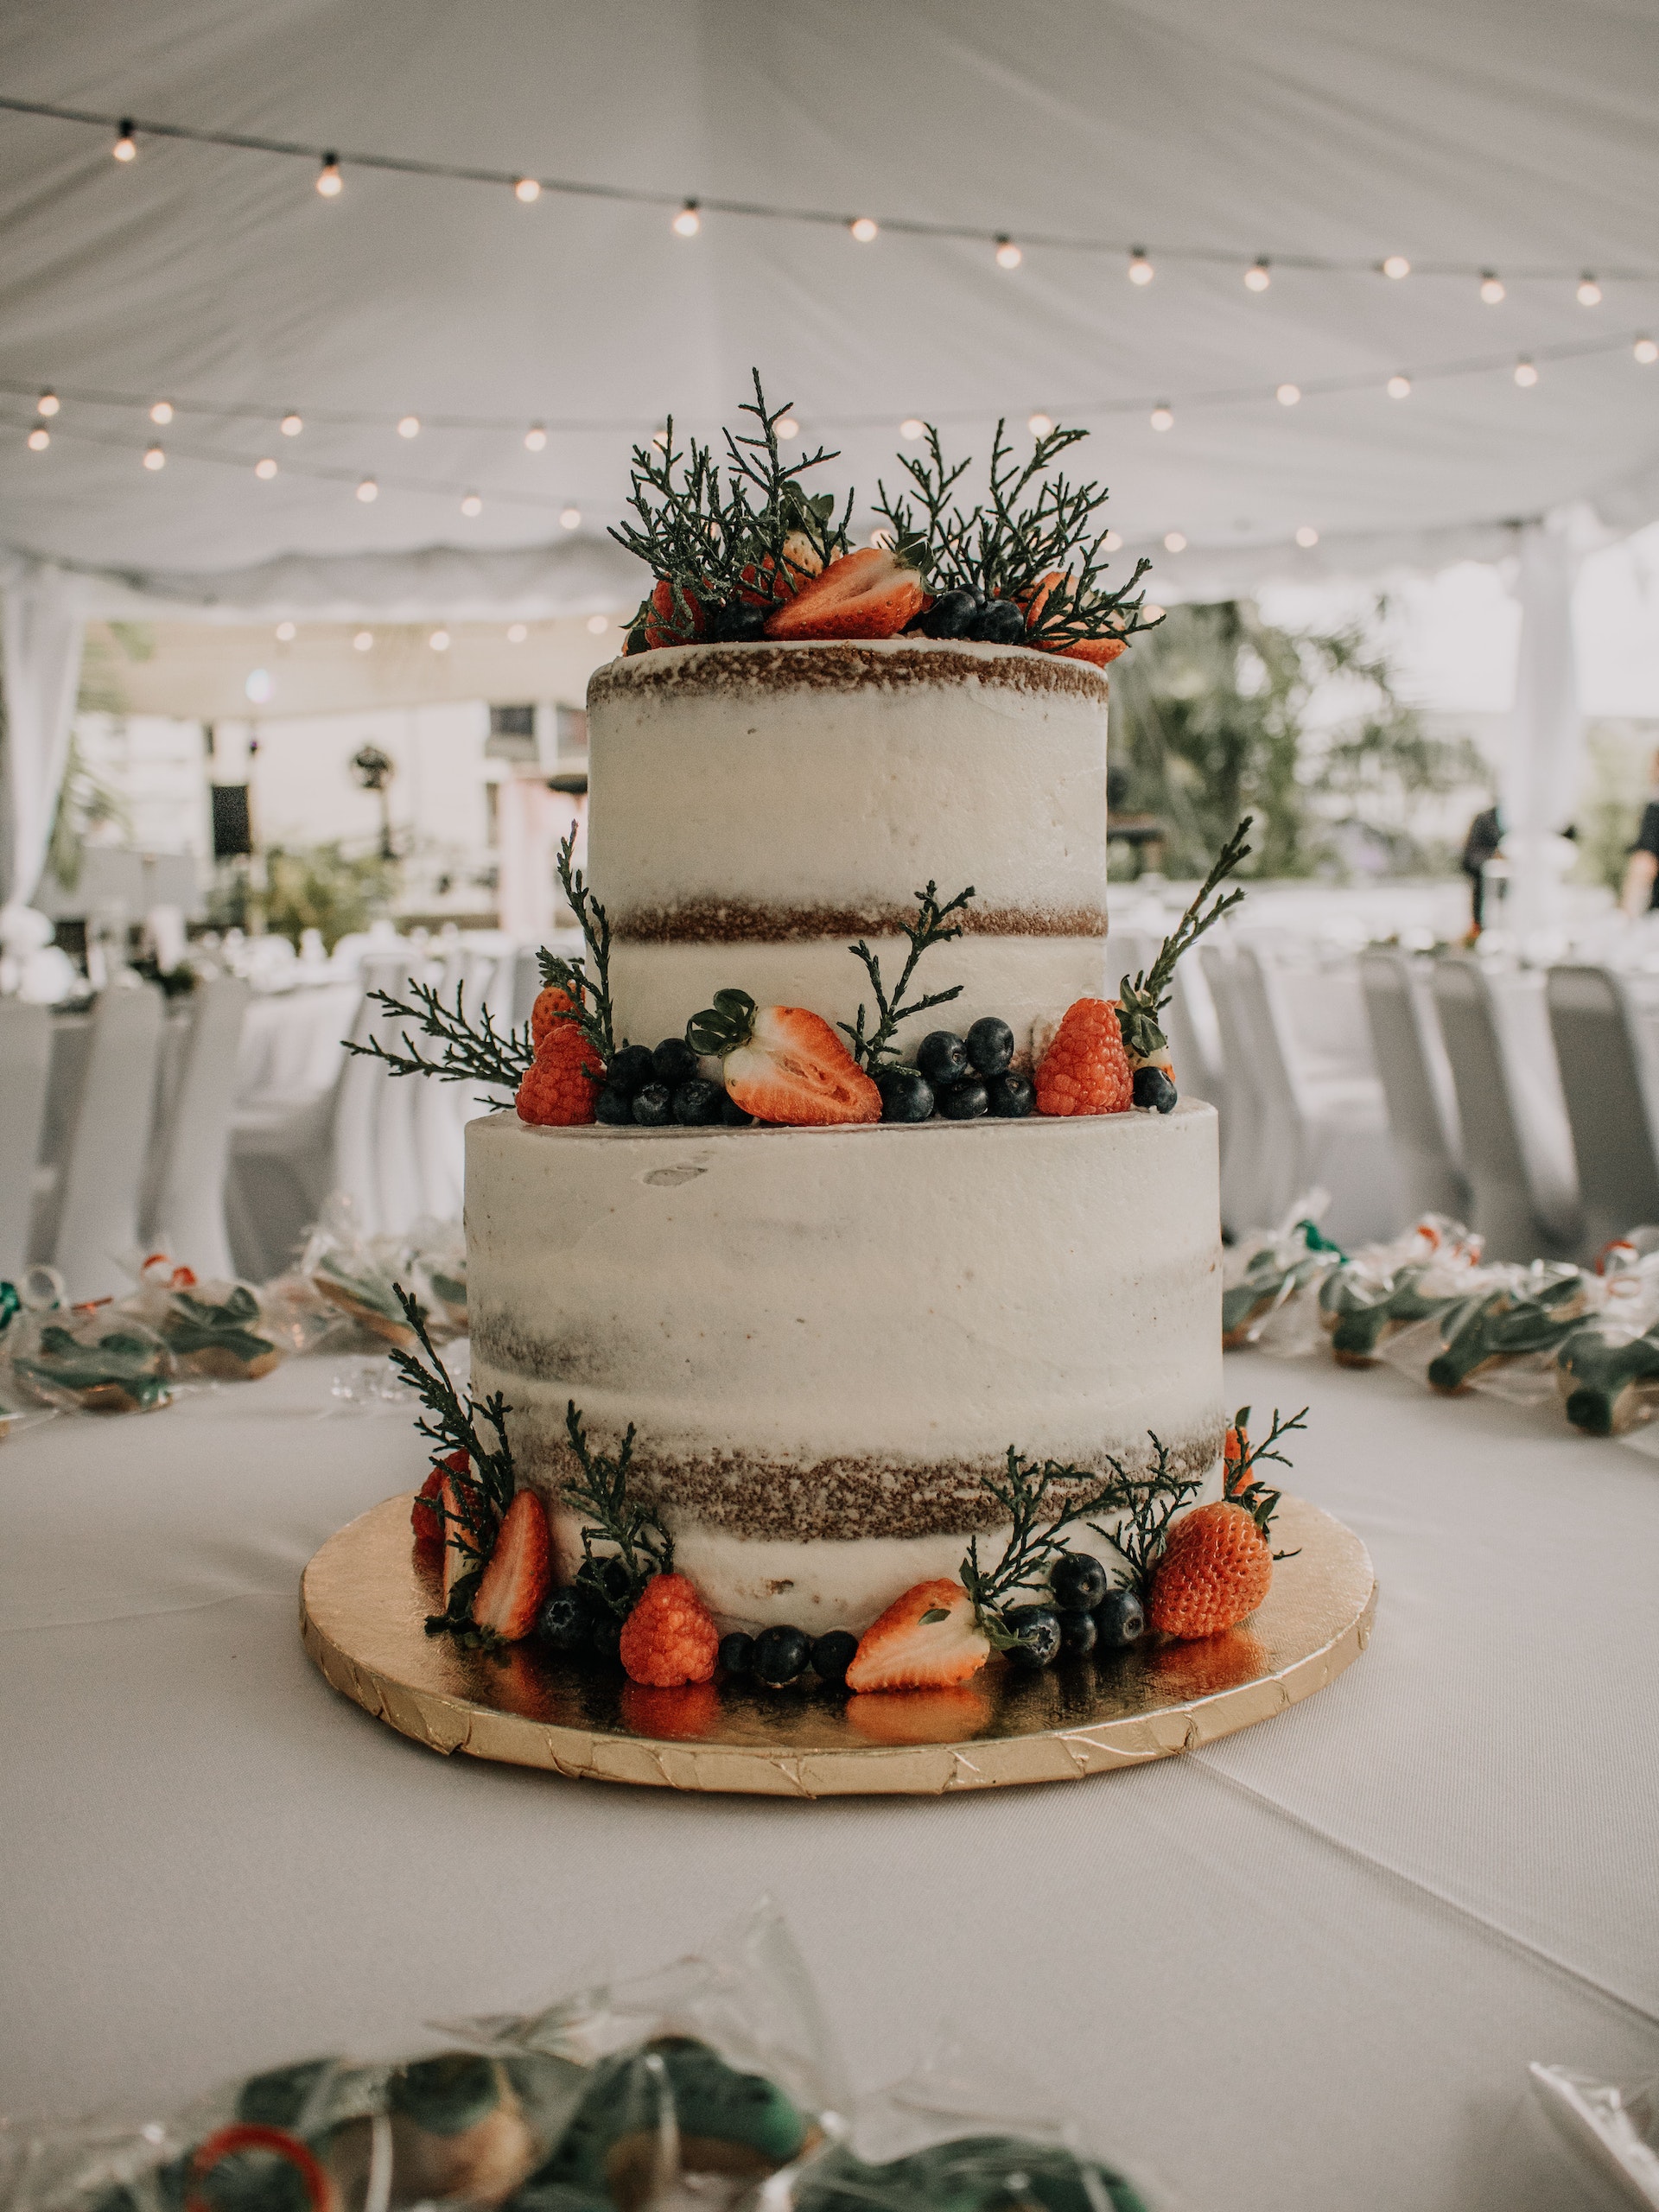 A wedding cake | Source: Pexels